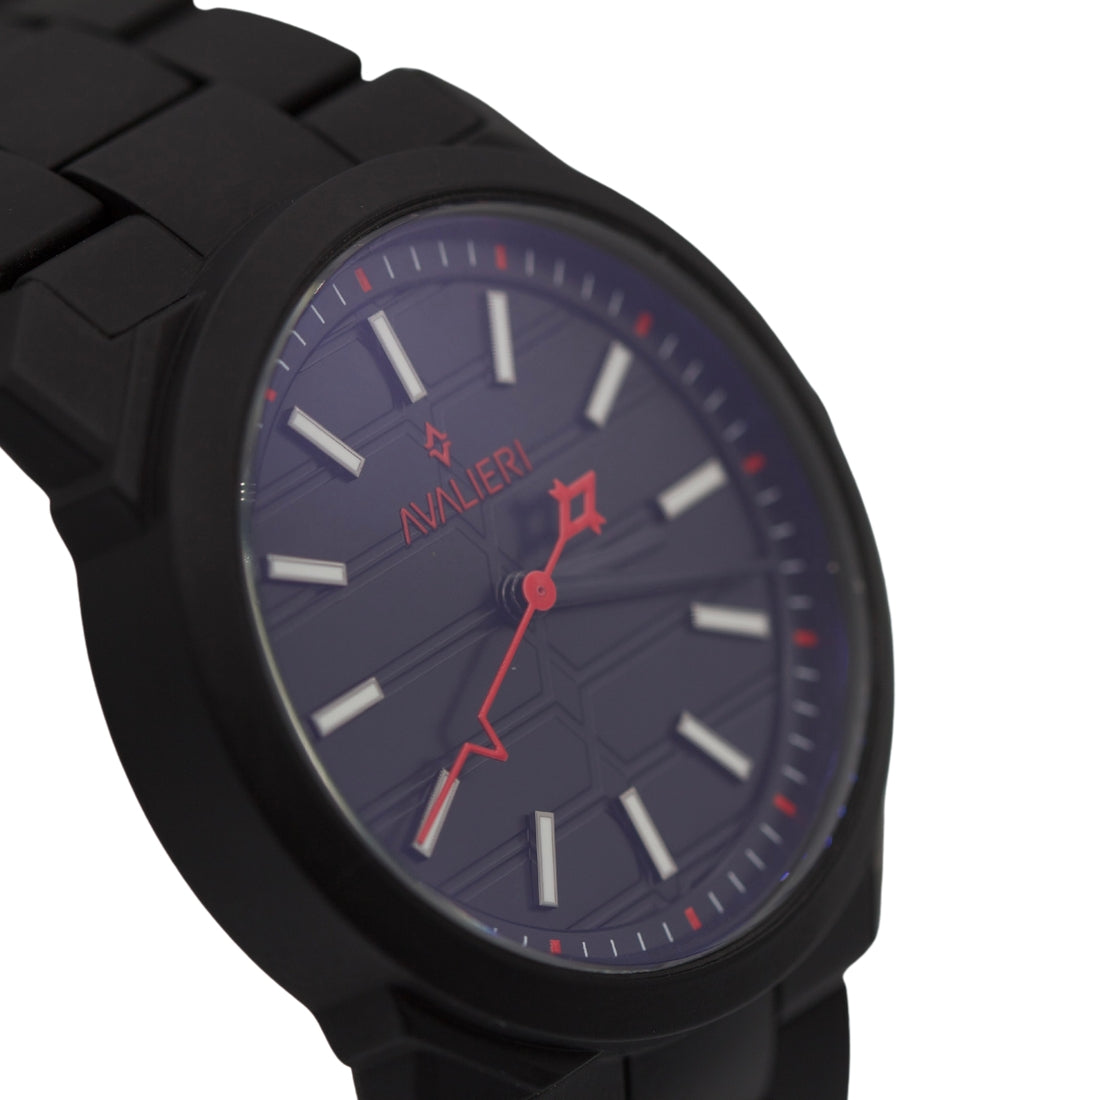 Avalieri Men's Quartz Watch with Black Dial - AV-2575B